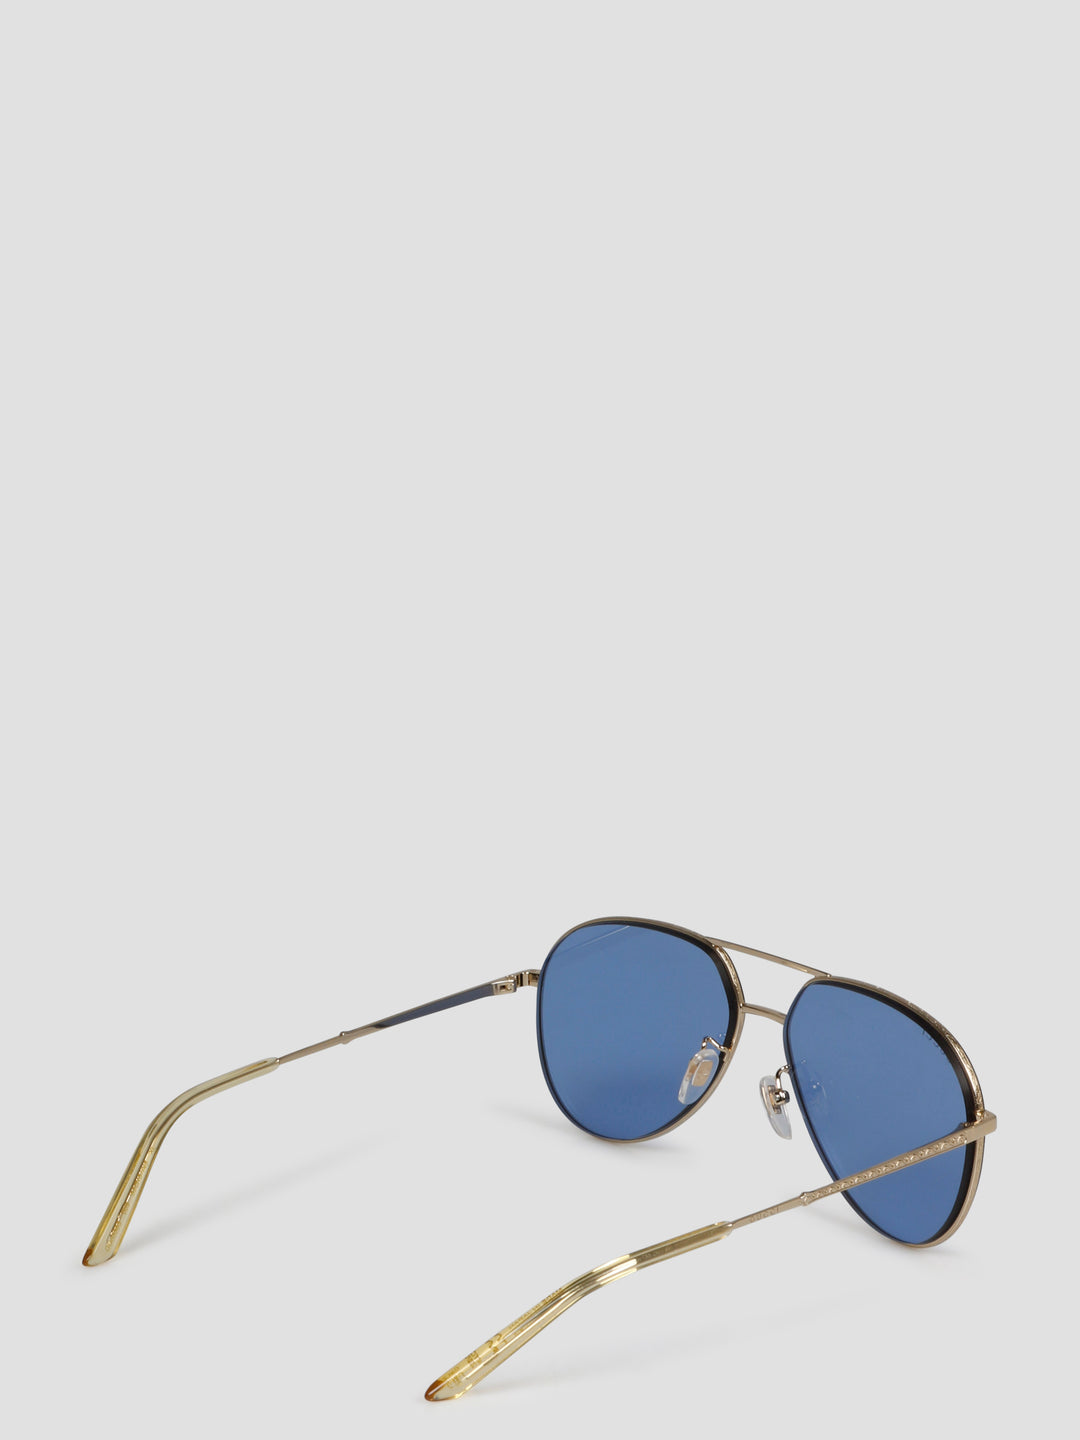 Aviator frame sunglasses